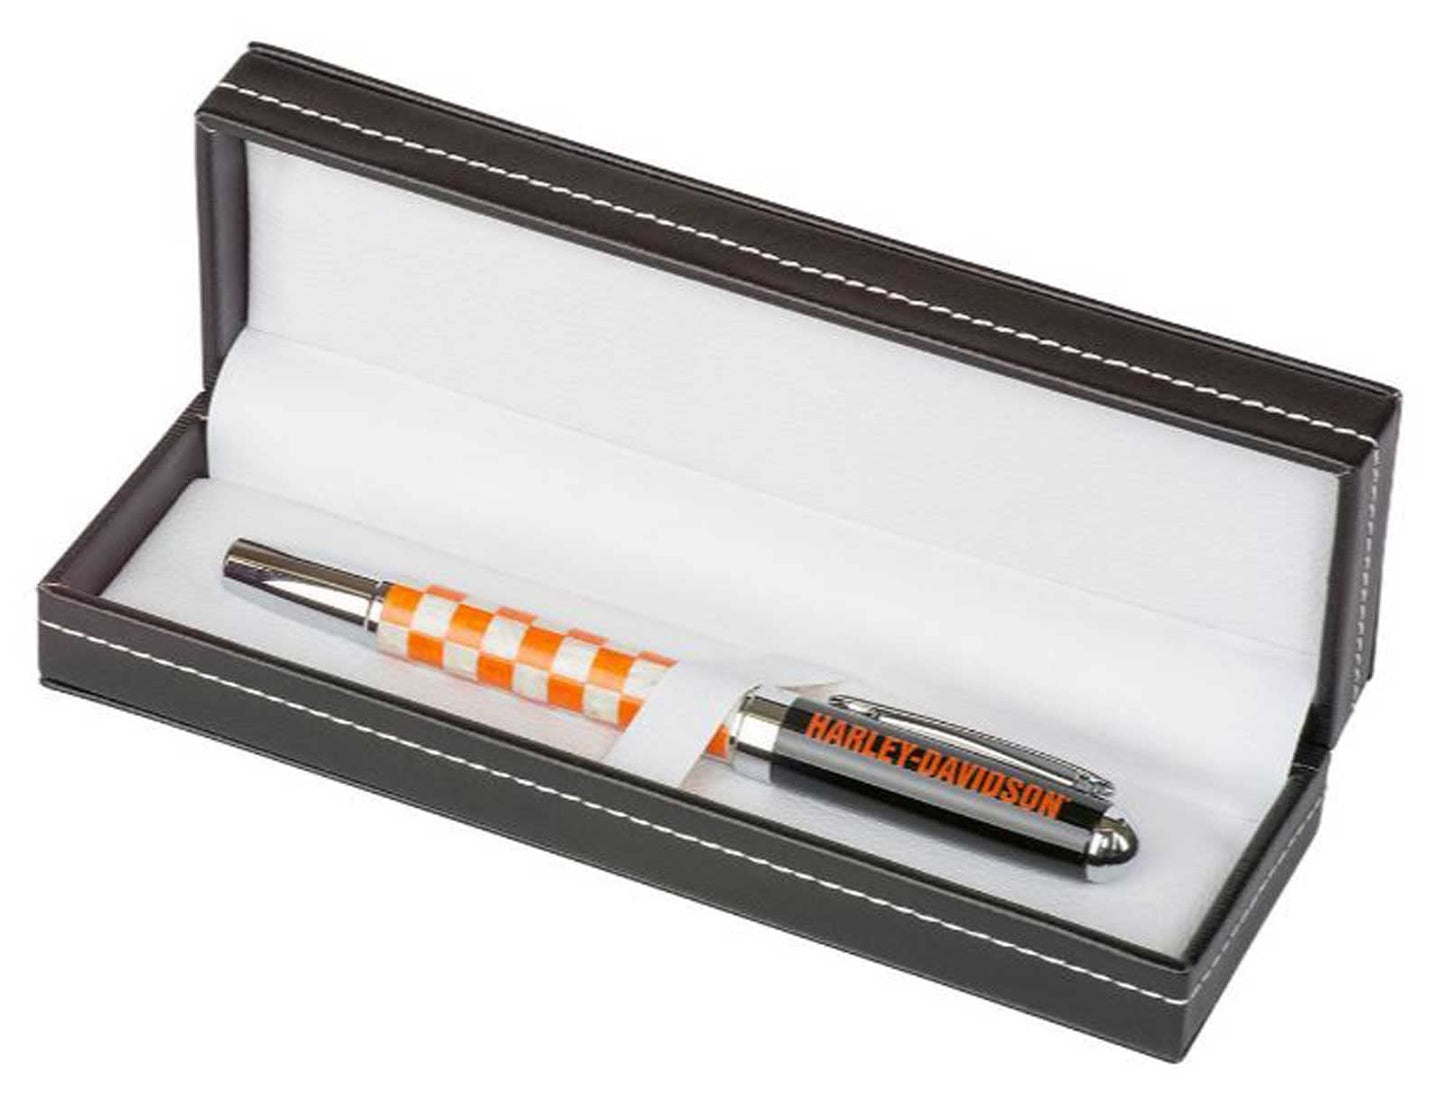 Harley-Davidson Checkered Orange Pen with Black Gift Box